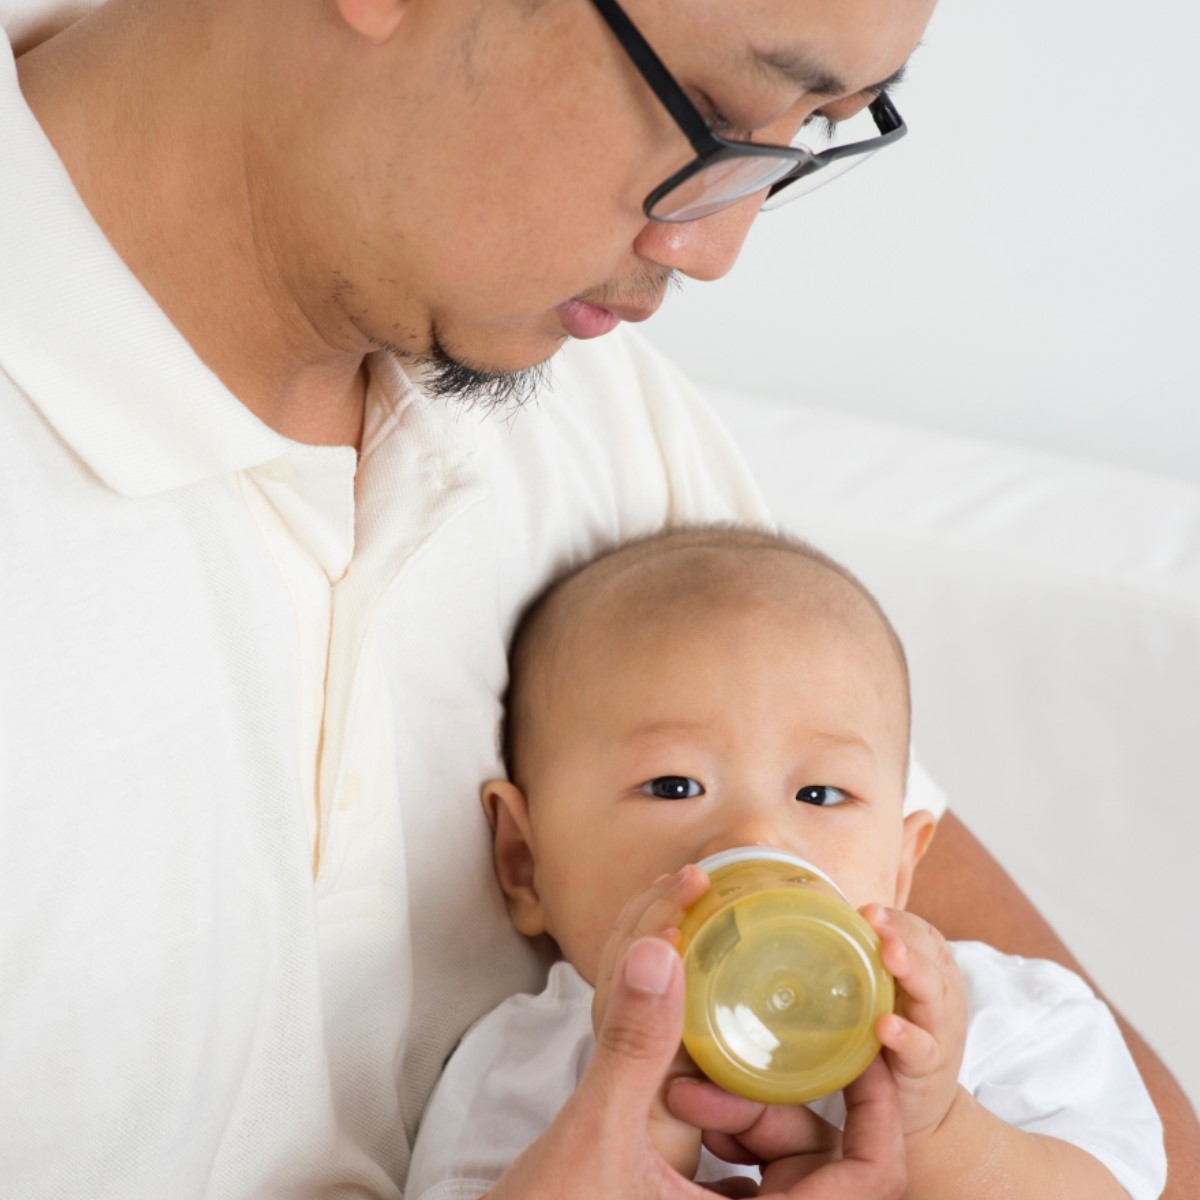 Father formula feeding his baby